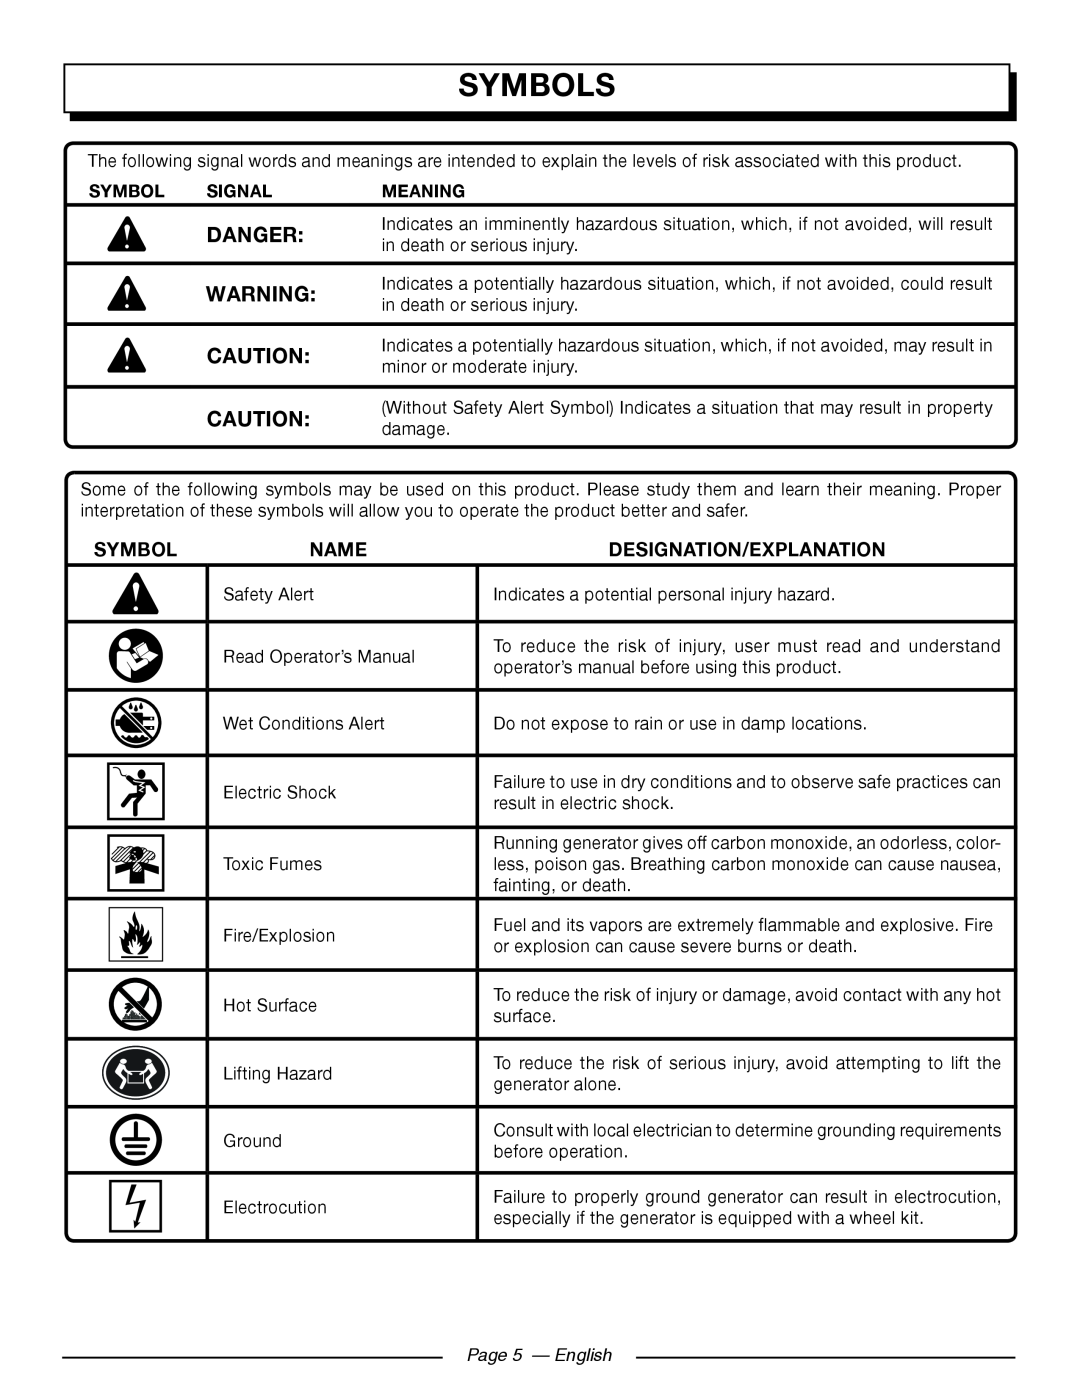 Homelite UT905011 manuel dutilisation Symbols, Name, Designation/Explanation, Signal, Meaning, Page 5 — English, Danger 